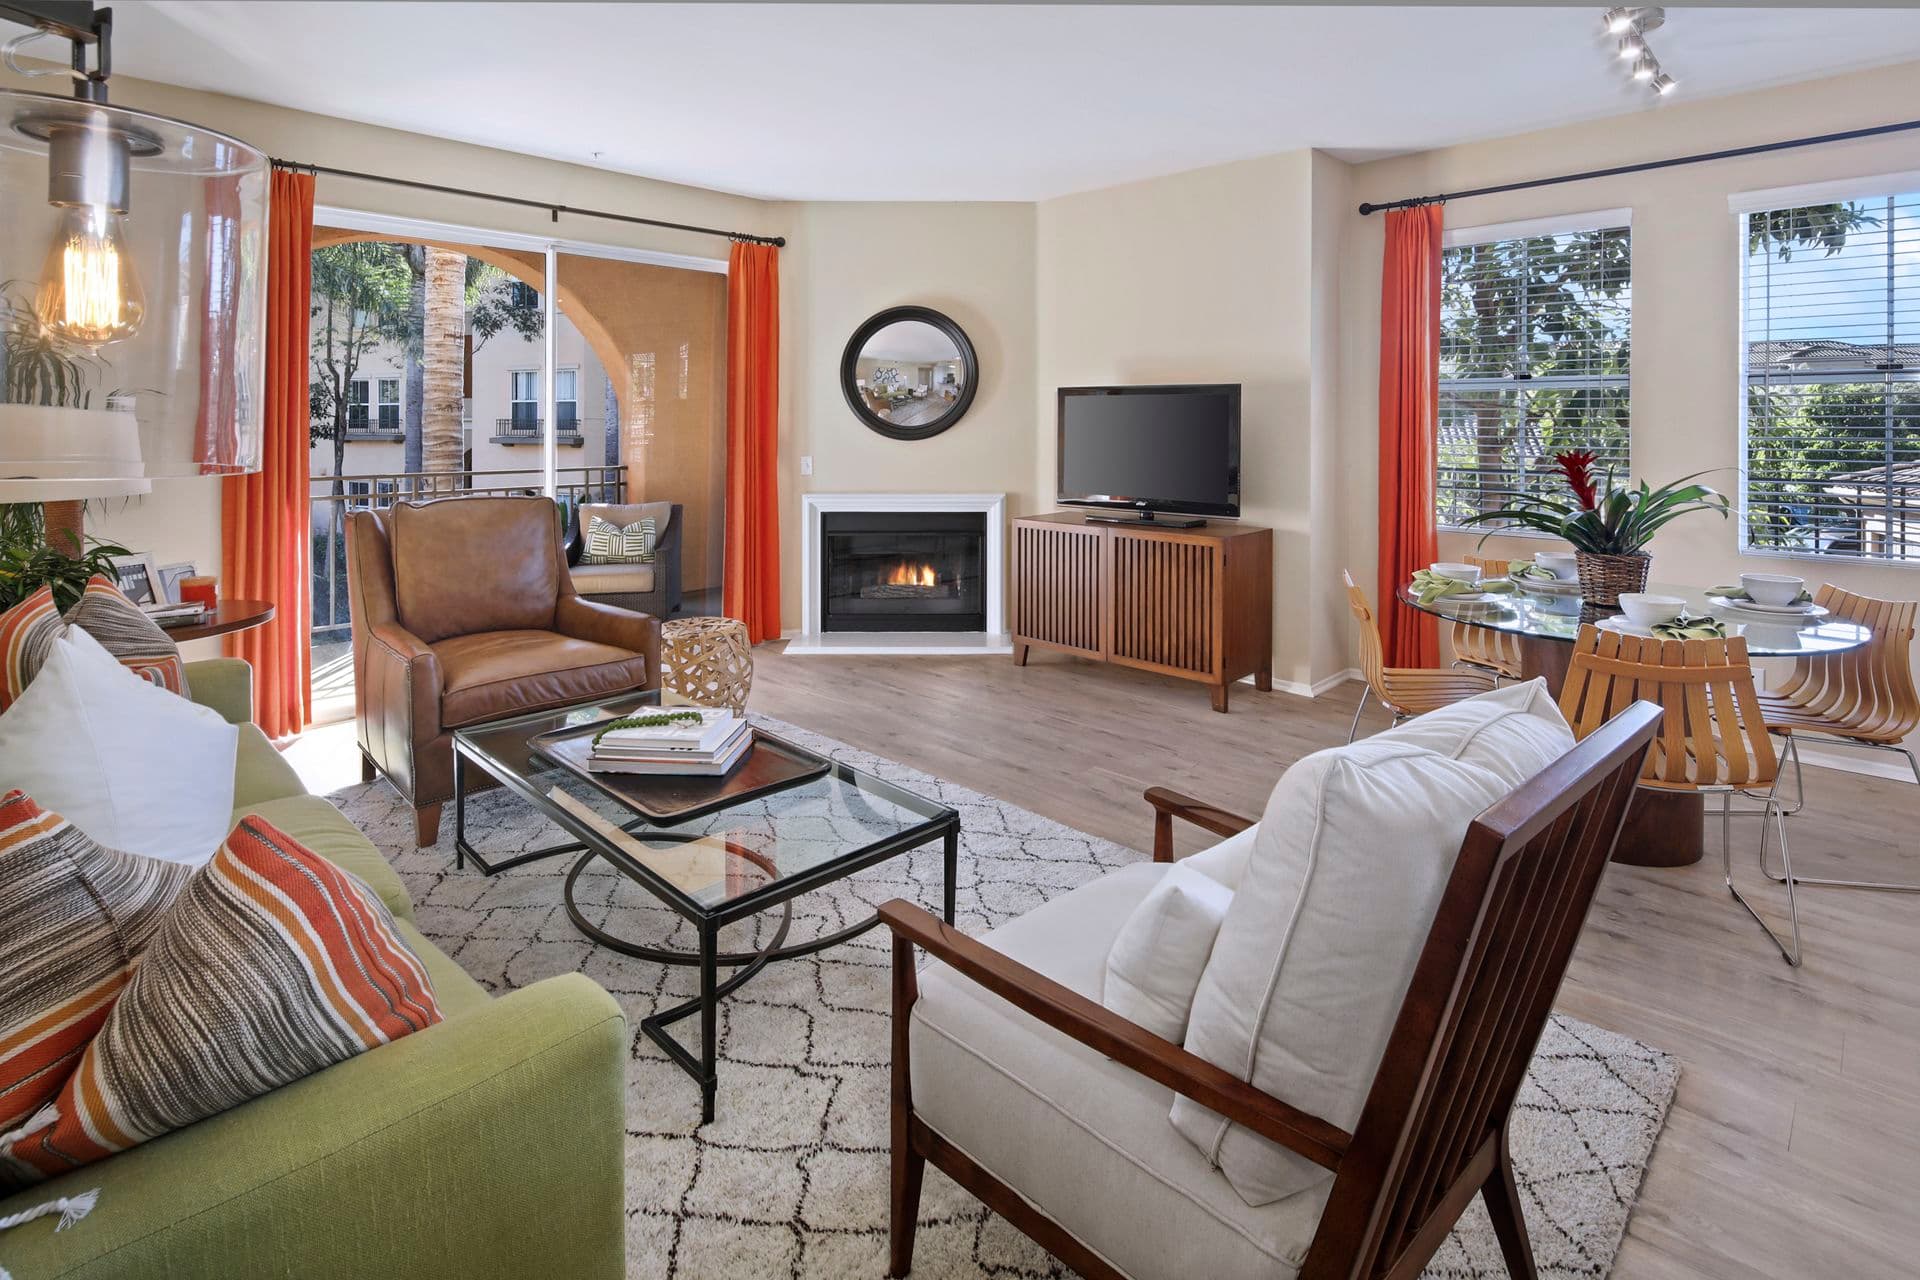 Interior view of living room at Villa Coronado Apartment Homes in Irvine, CA.